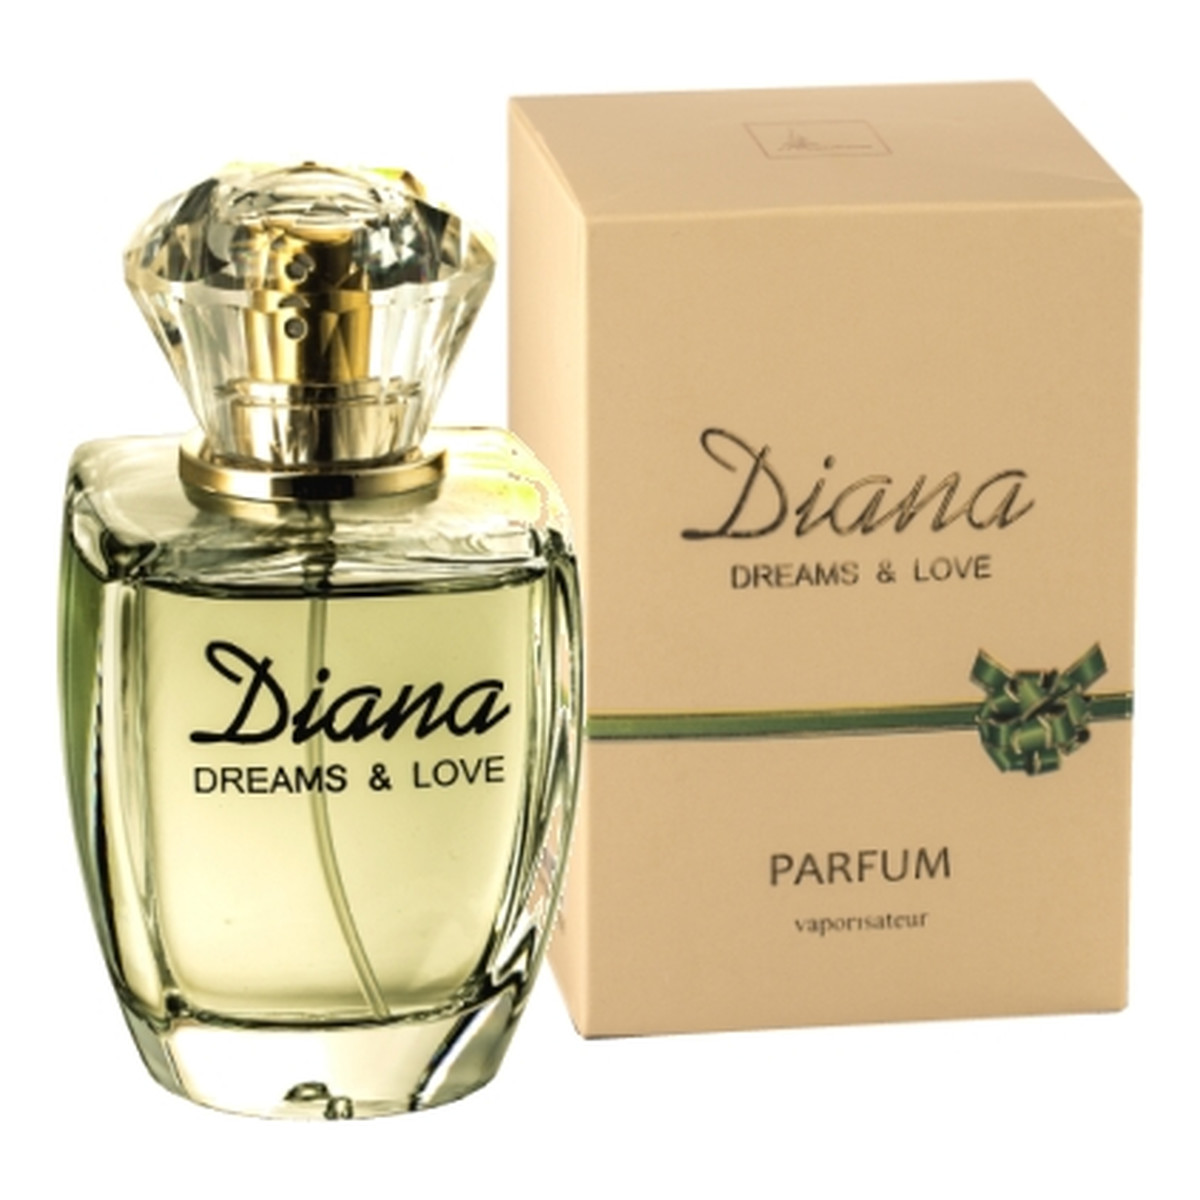 Paris Avenue Diana Dreams & Love PARFUM Woda Perfumowana 100ml